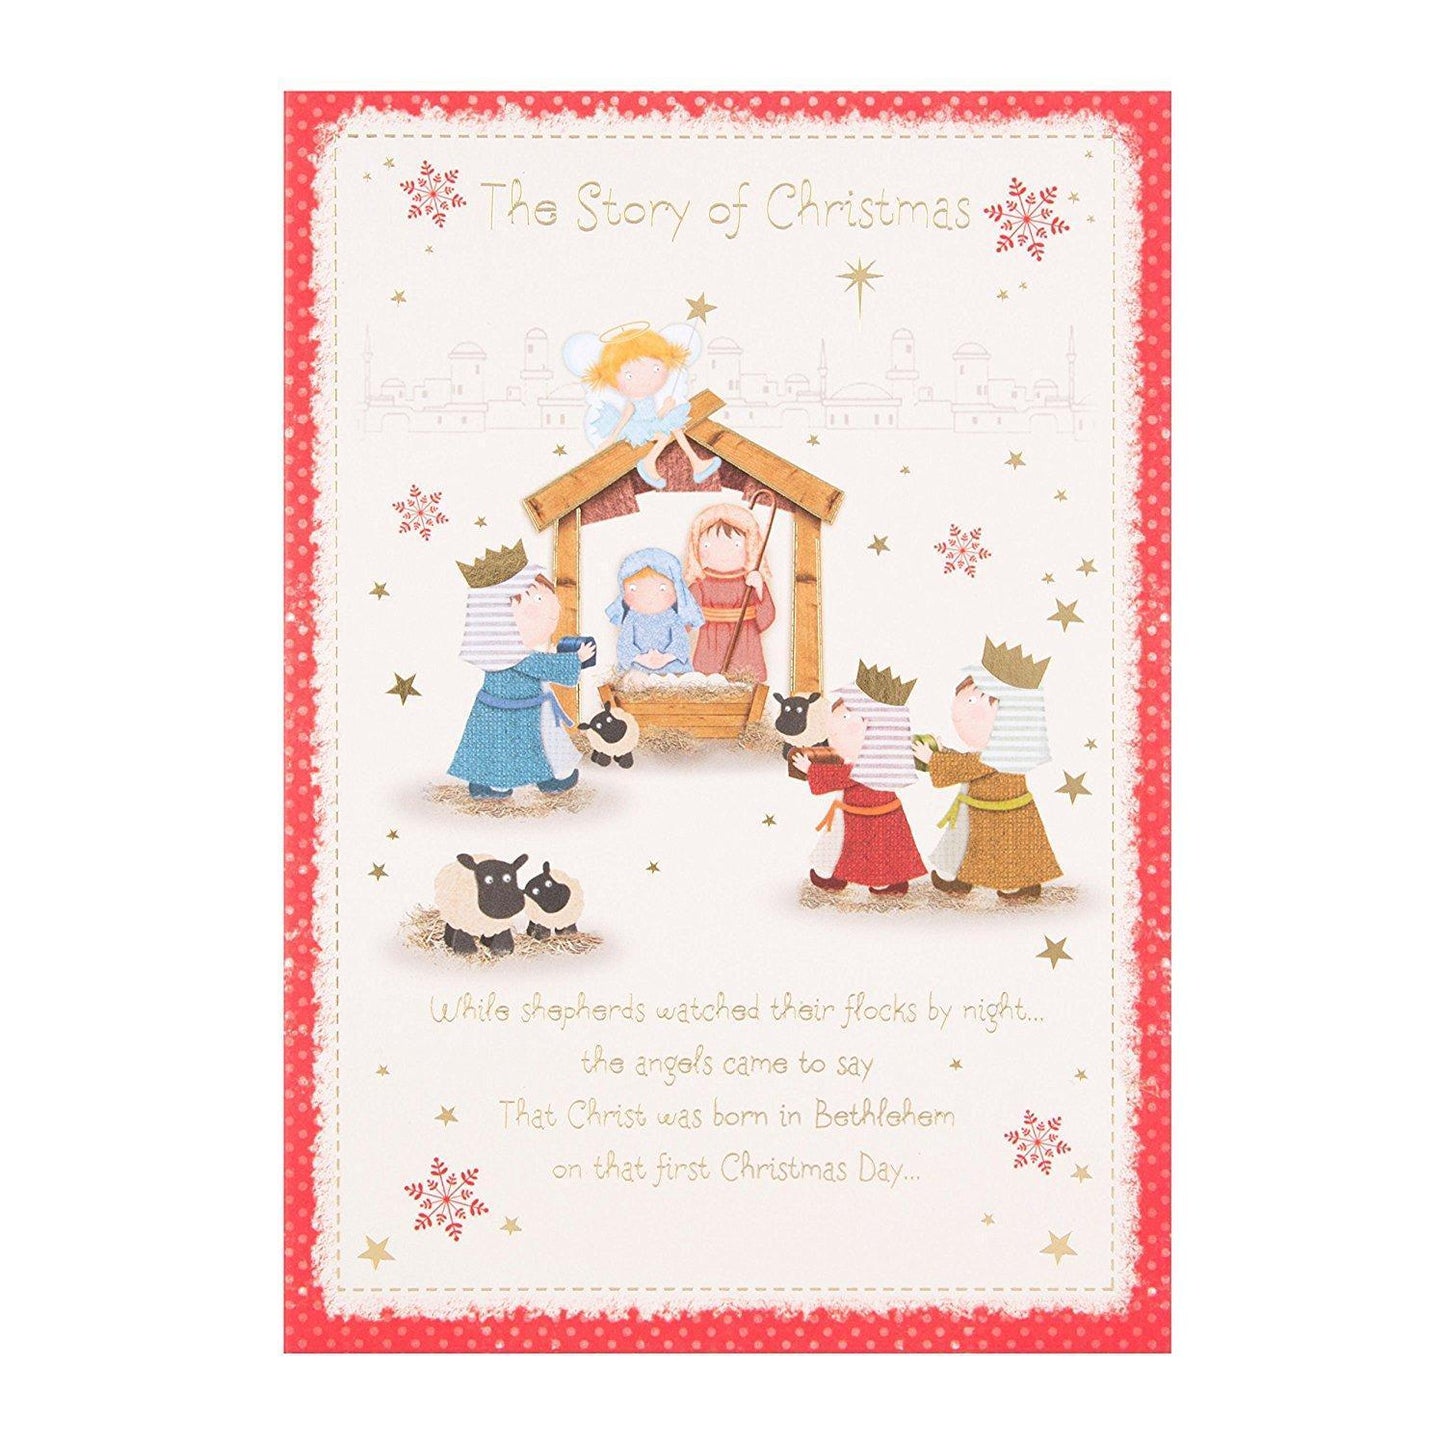 The Christmas Story Christmas Greetings Cards